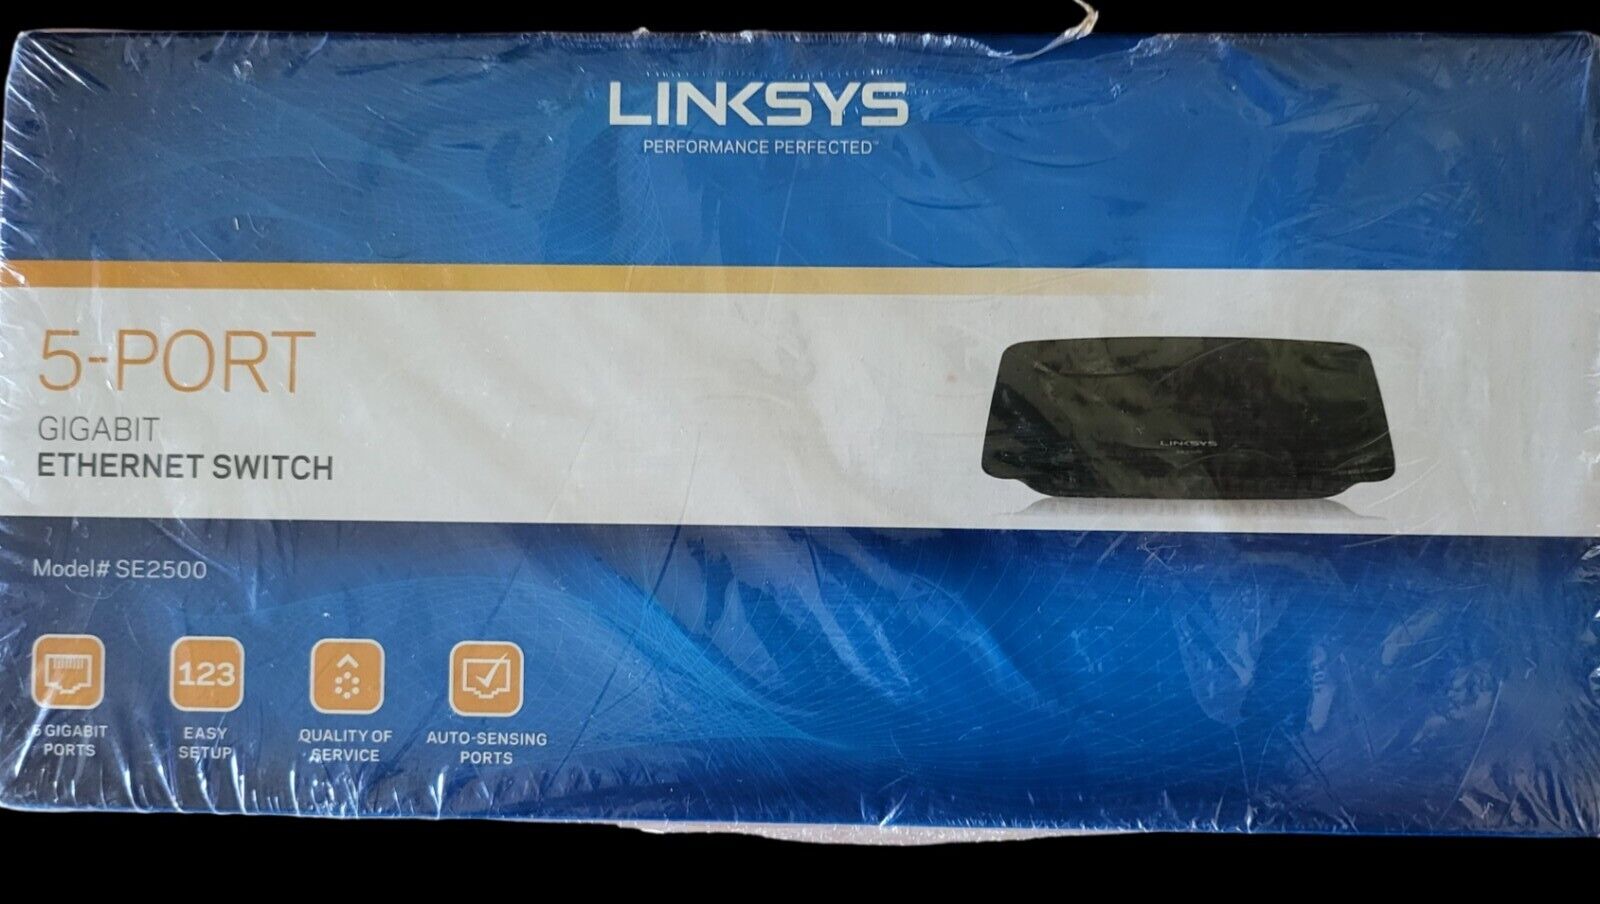 New In Box Linksys Gigabit External Ethernet Switch Model# SE2500